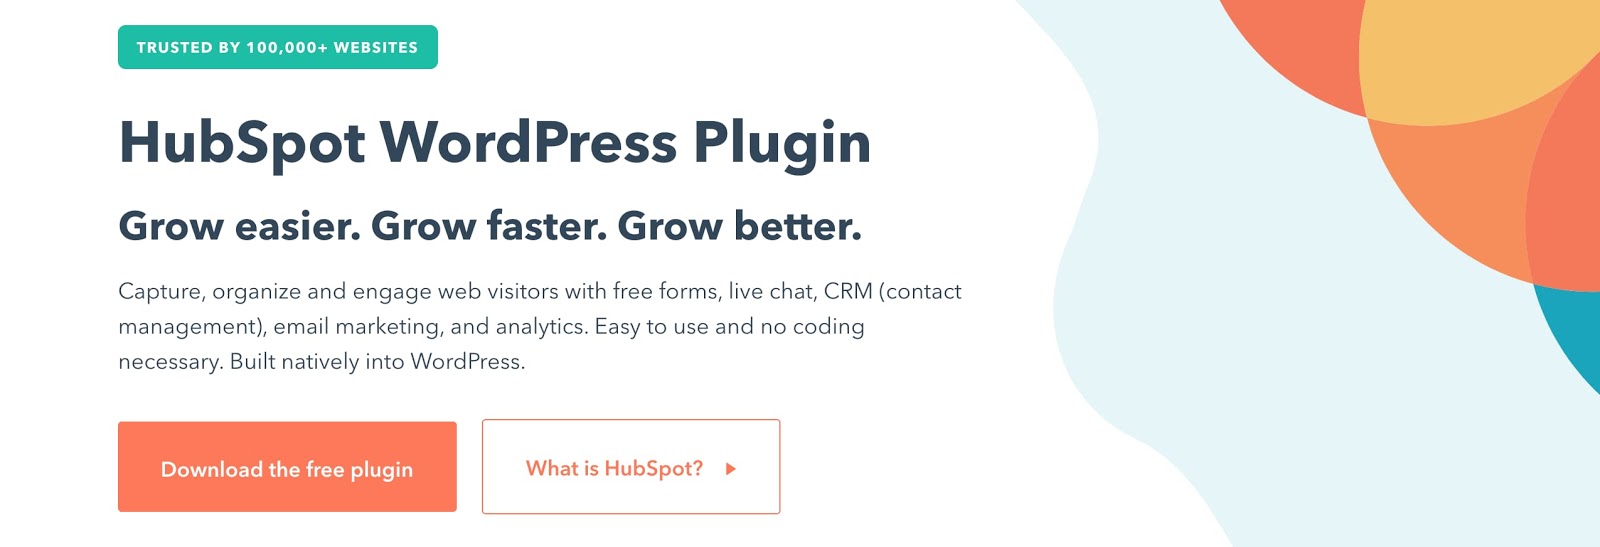 HubSpot WordPress Plugin product page